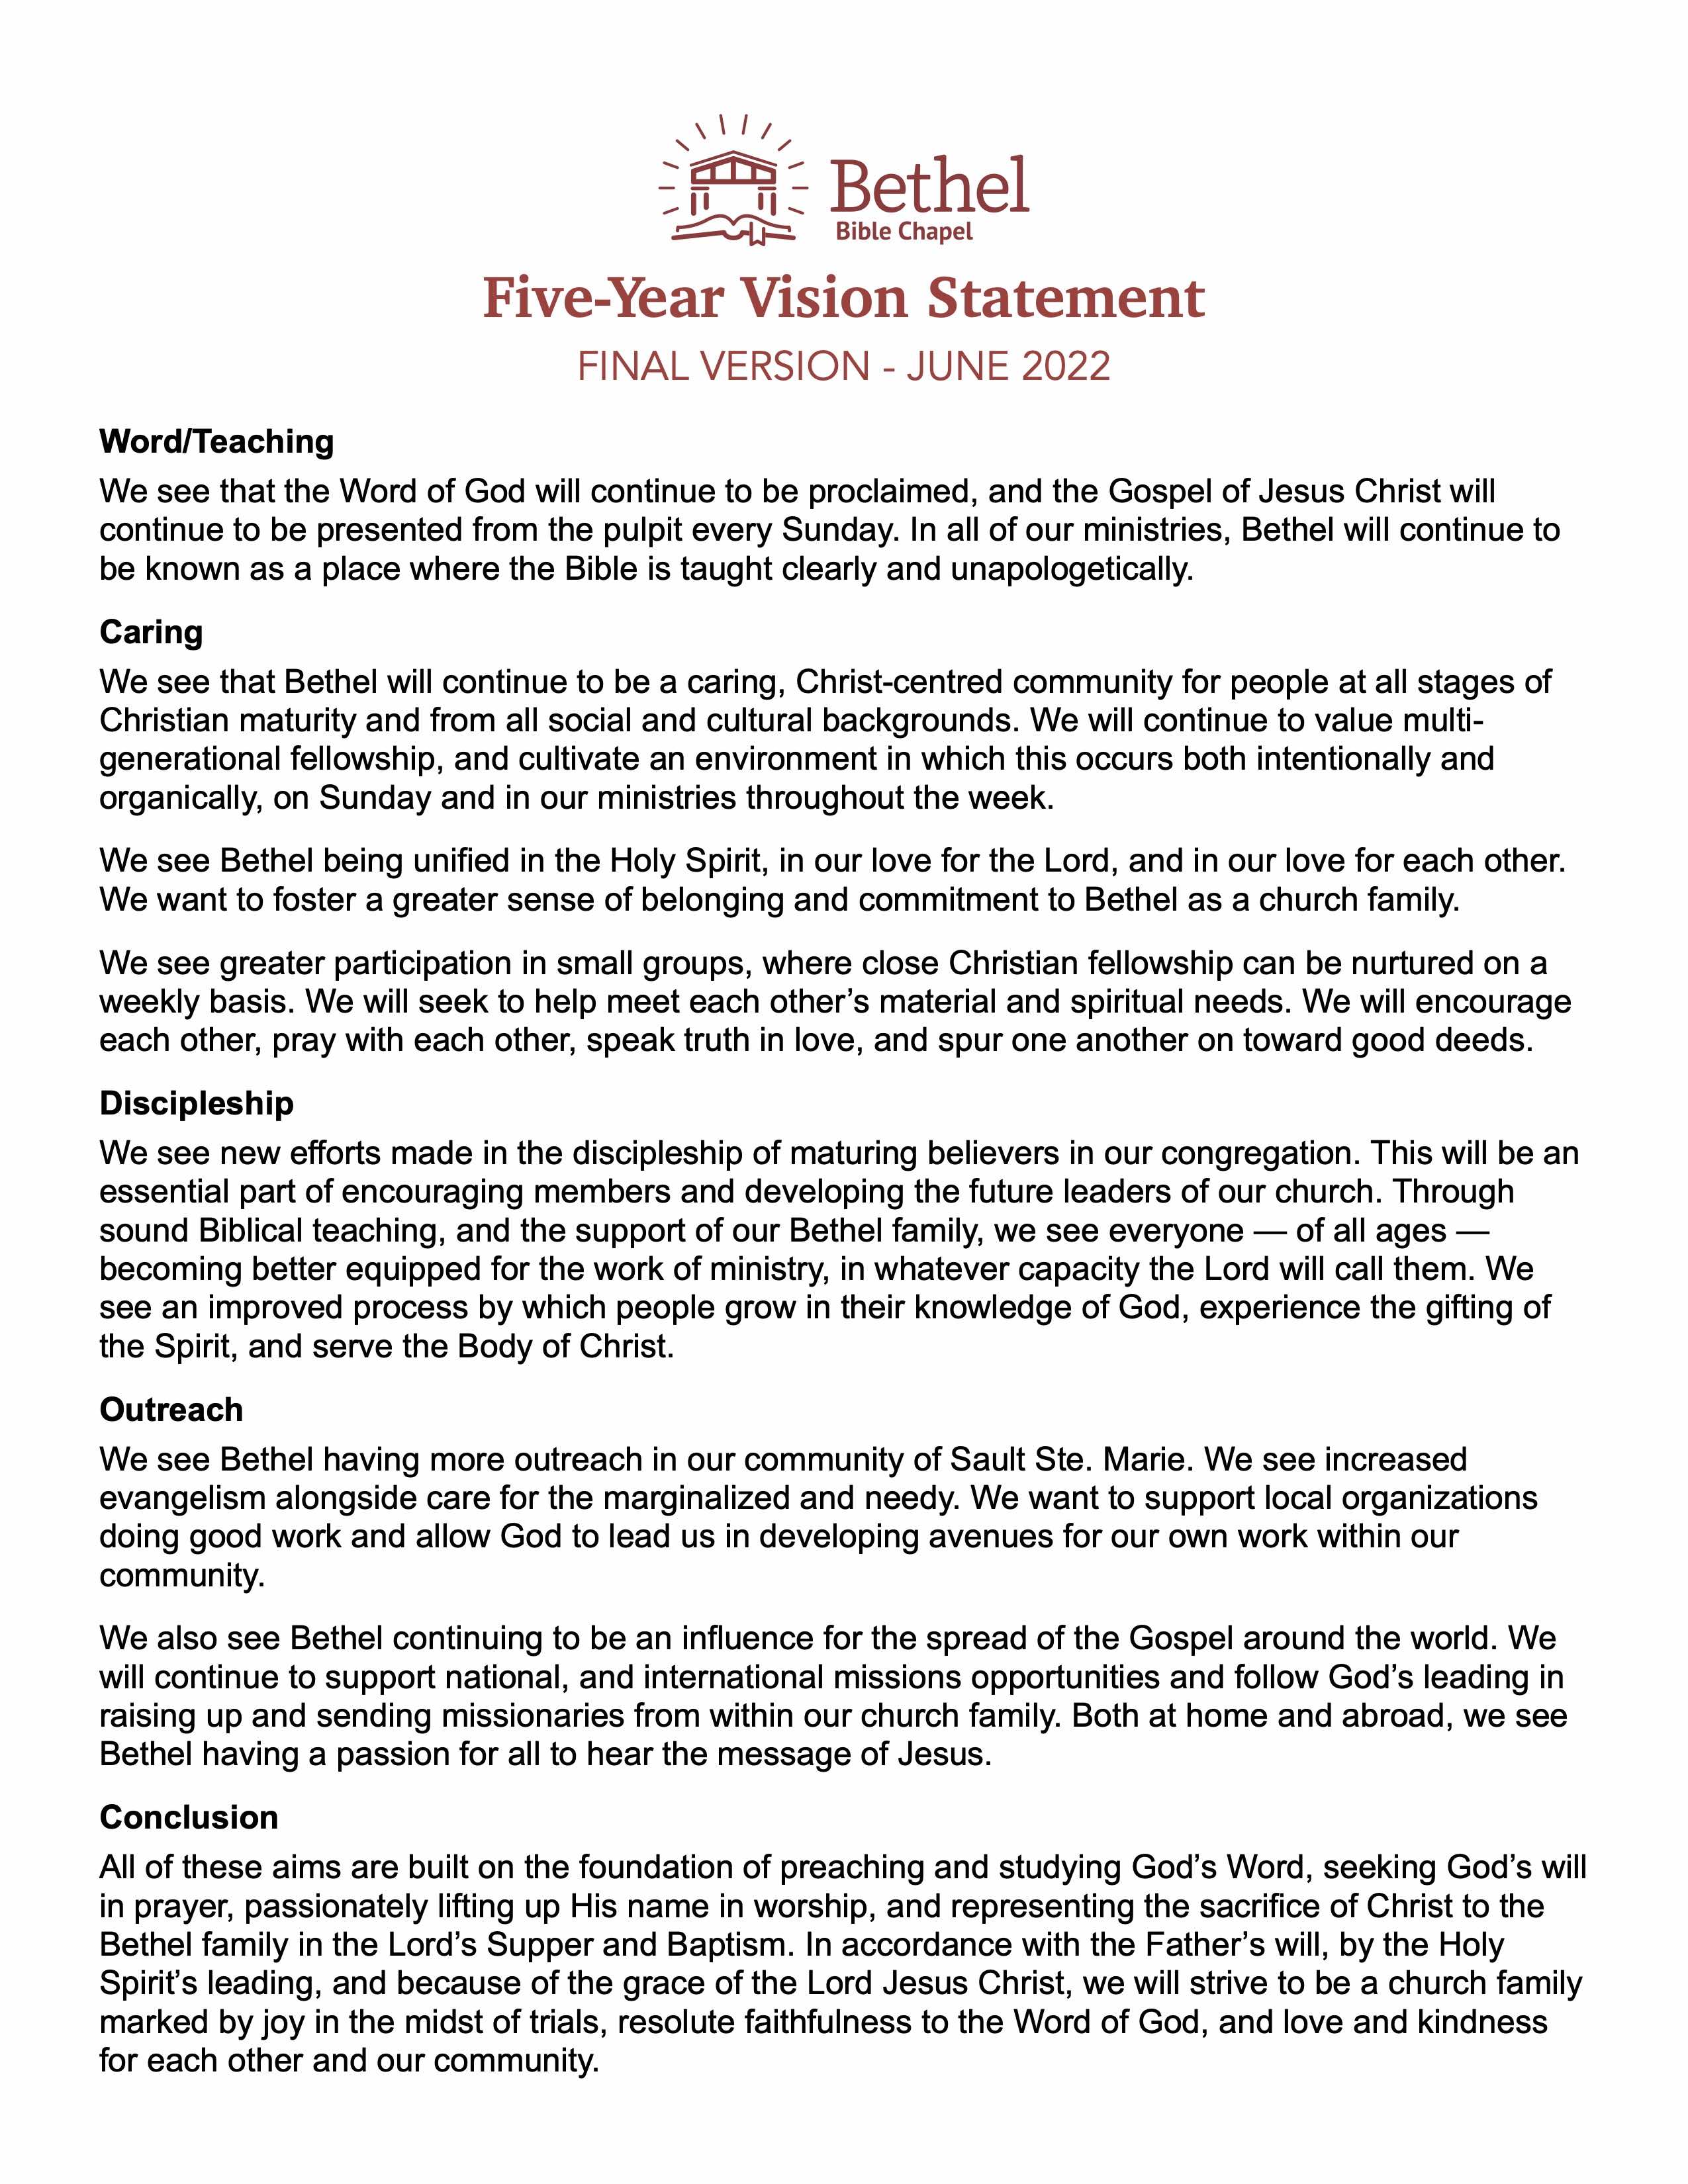 Bethel Five-Year Vision Statement